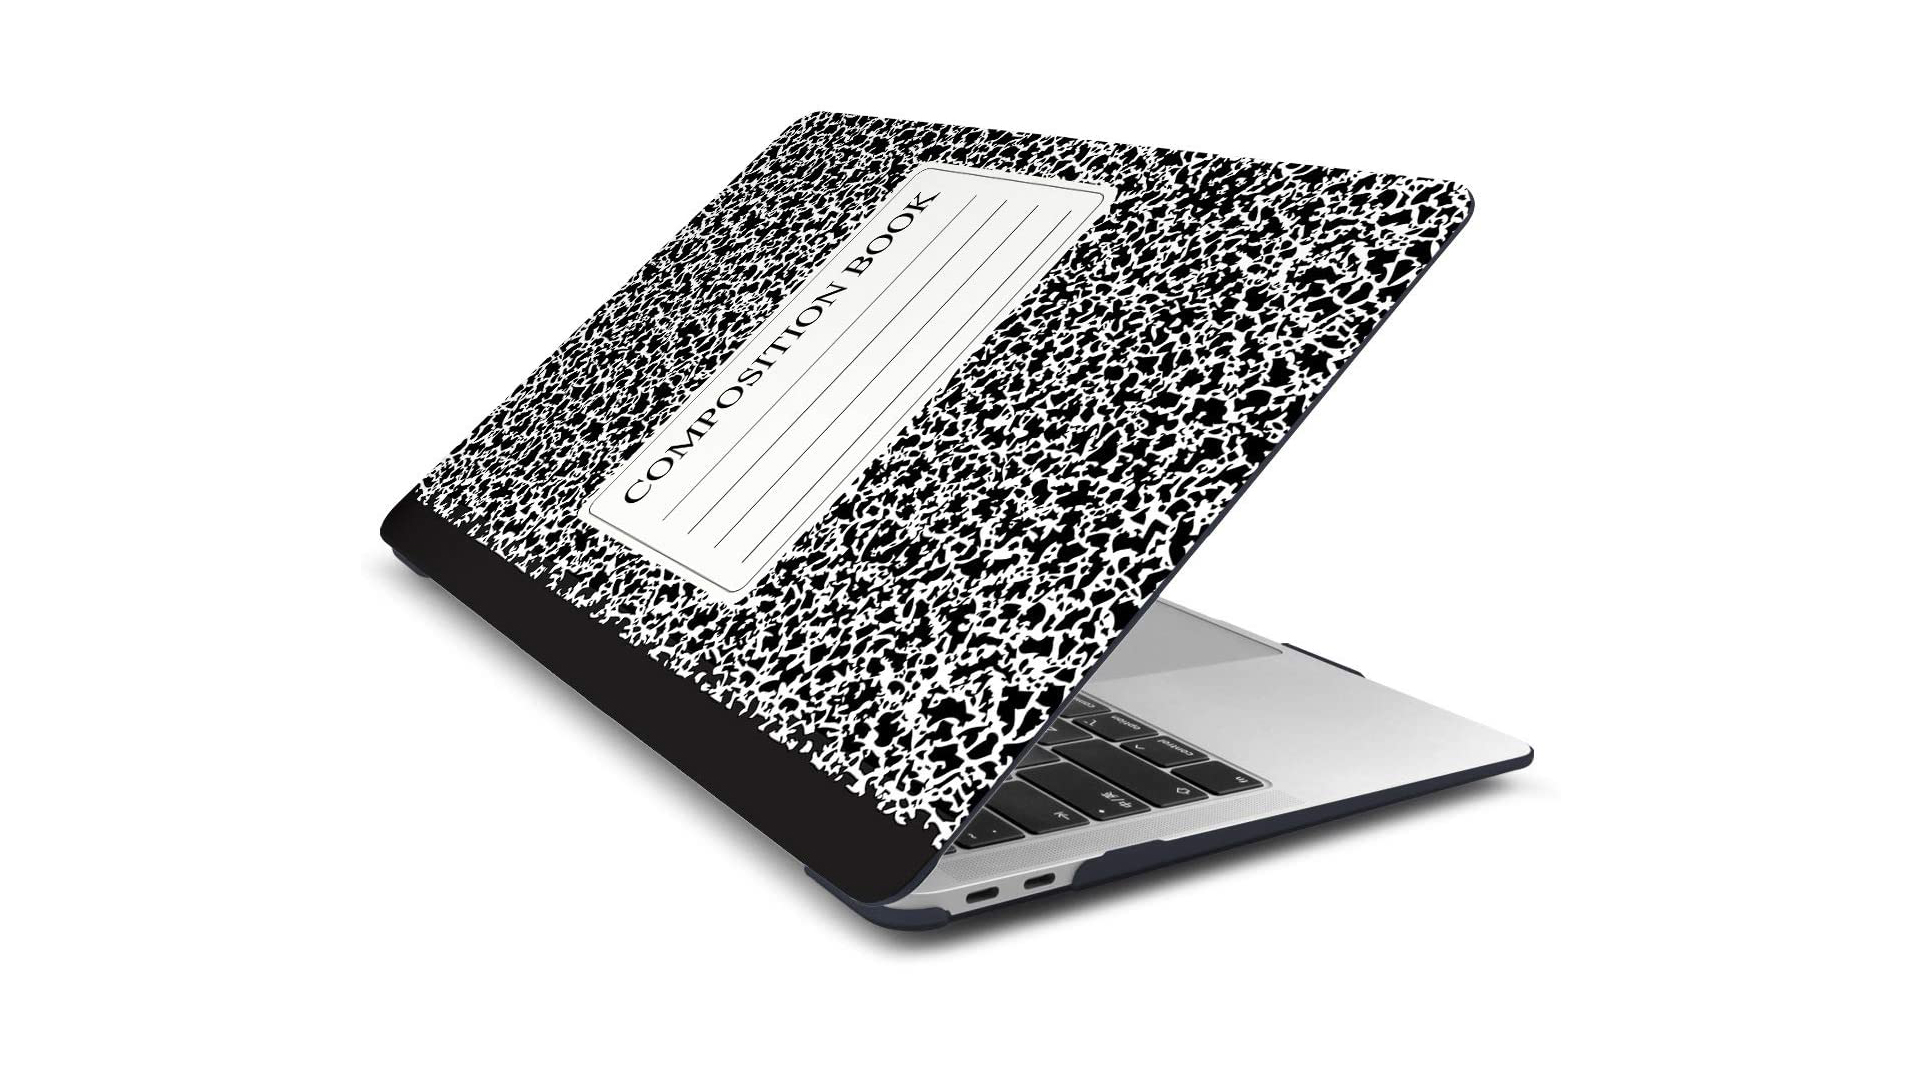 Dongke MacBook Air composition notebook hard ase